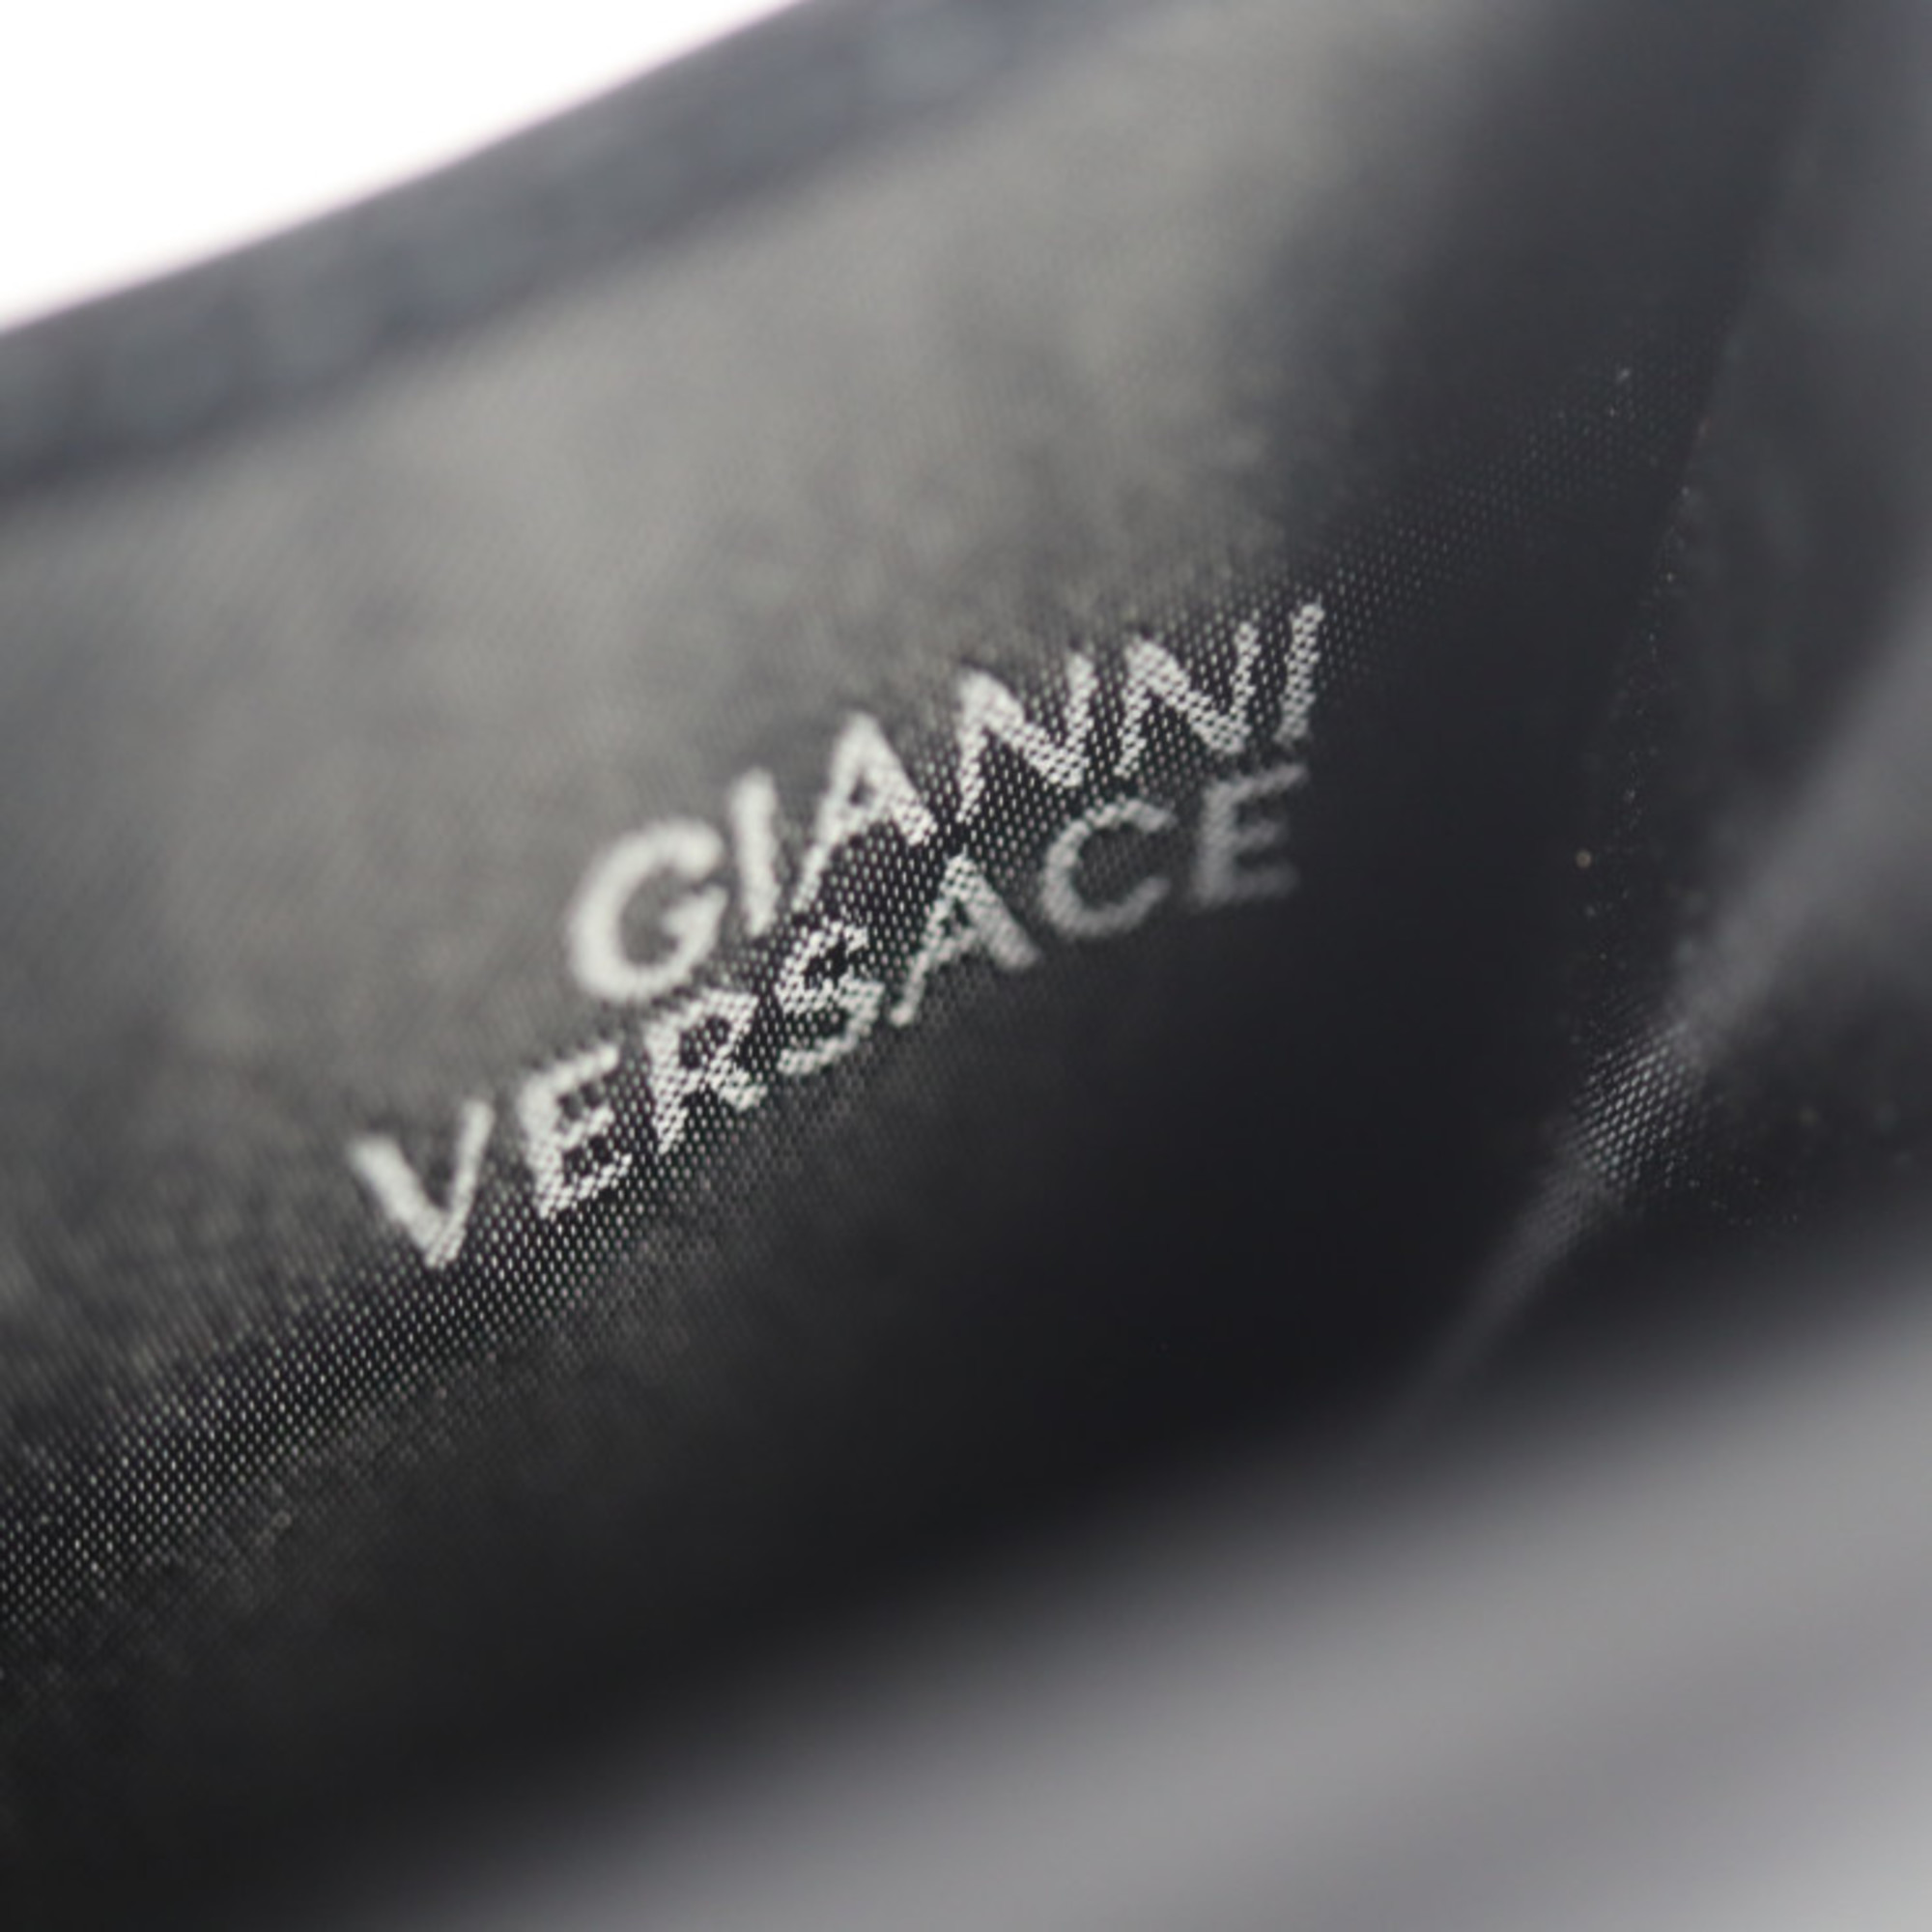 Gianni Versace Sunburst Other Accessories Leather Black Gold Hardware Cigarette Case Embossed